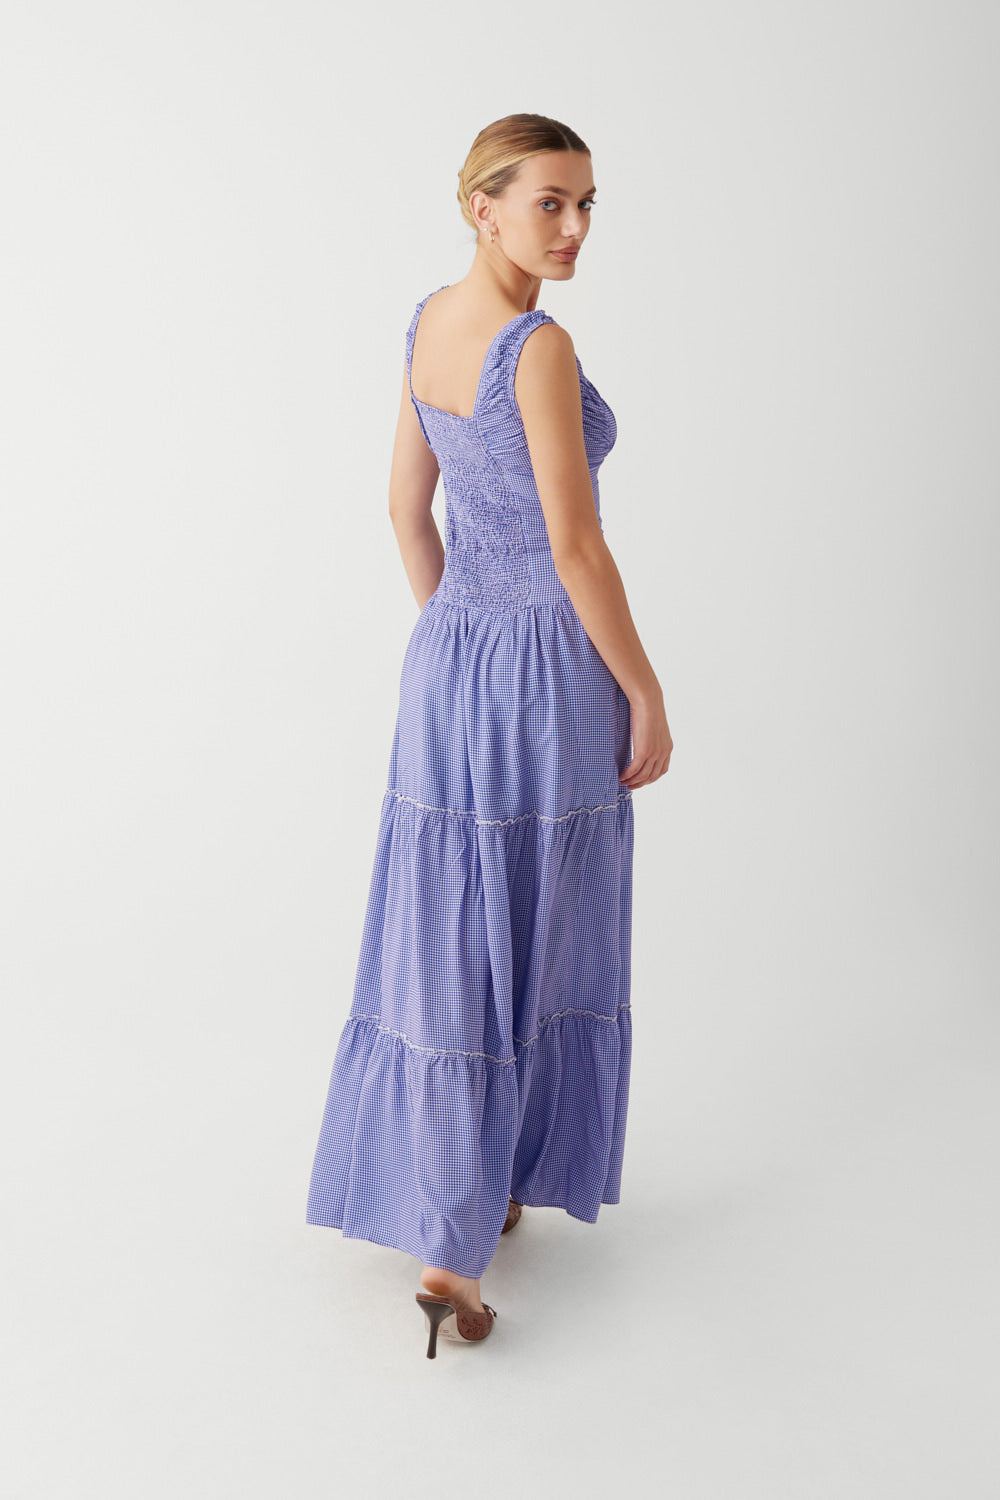 Christabelle Ruffle Maxi Dress - Sailor Gingham